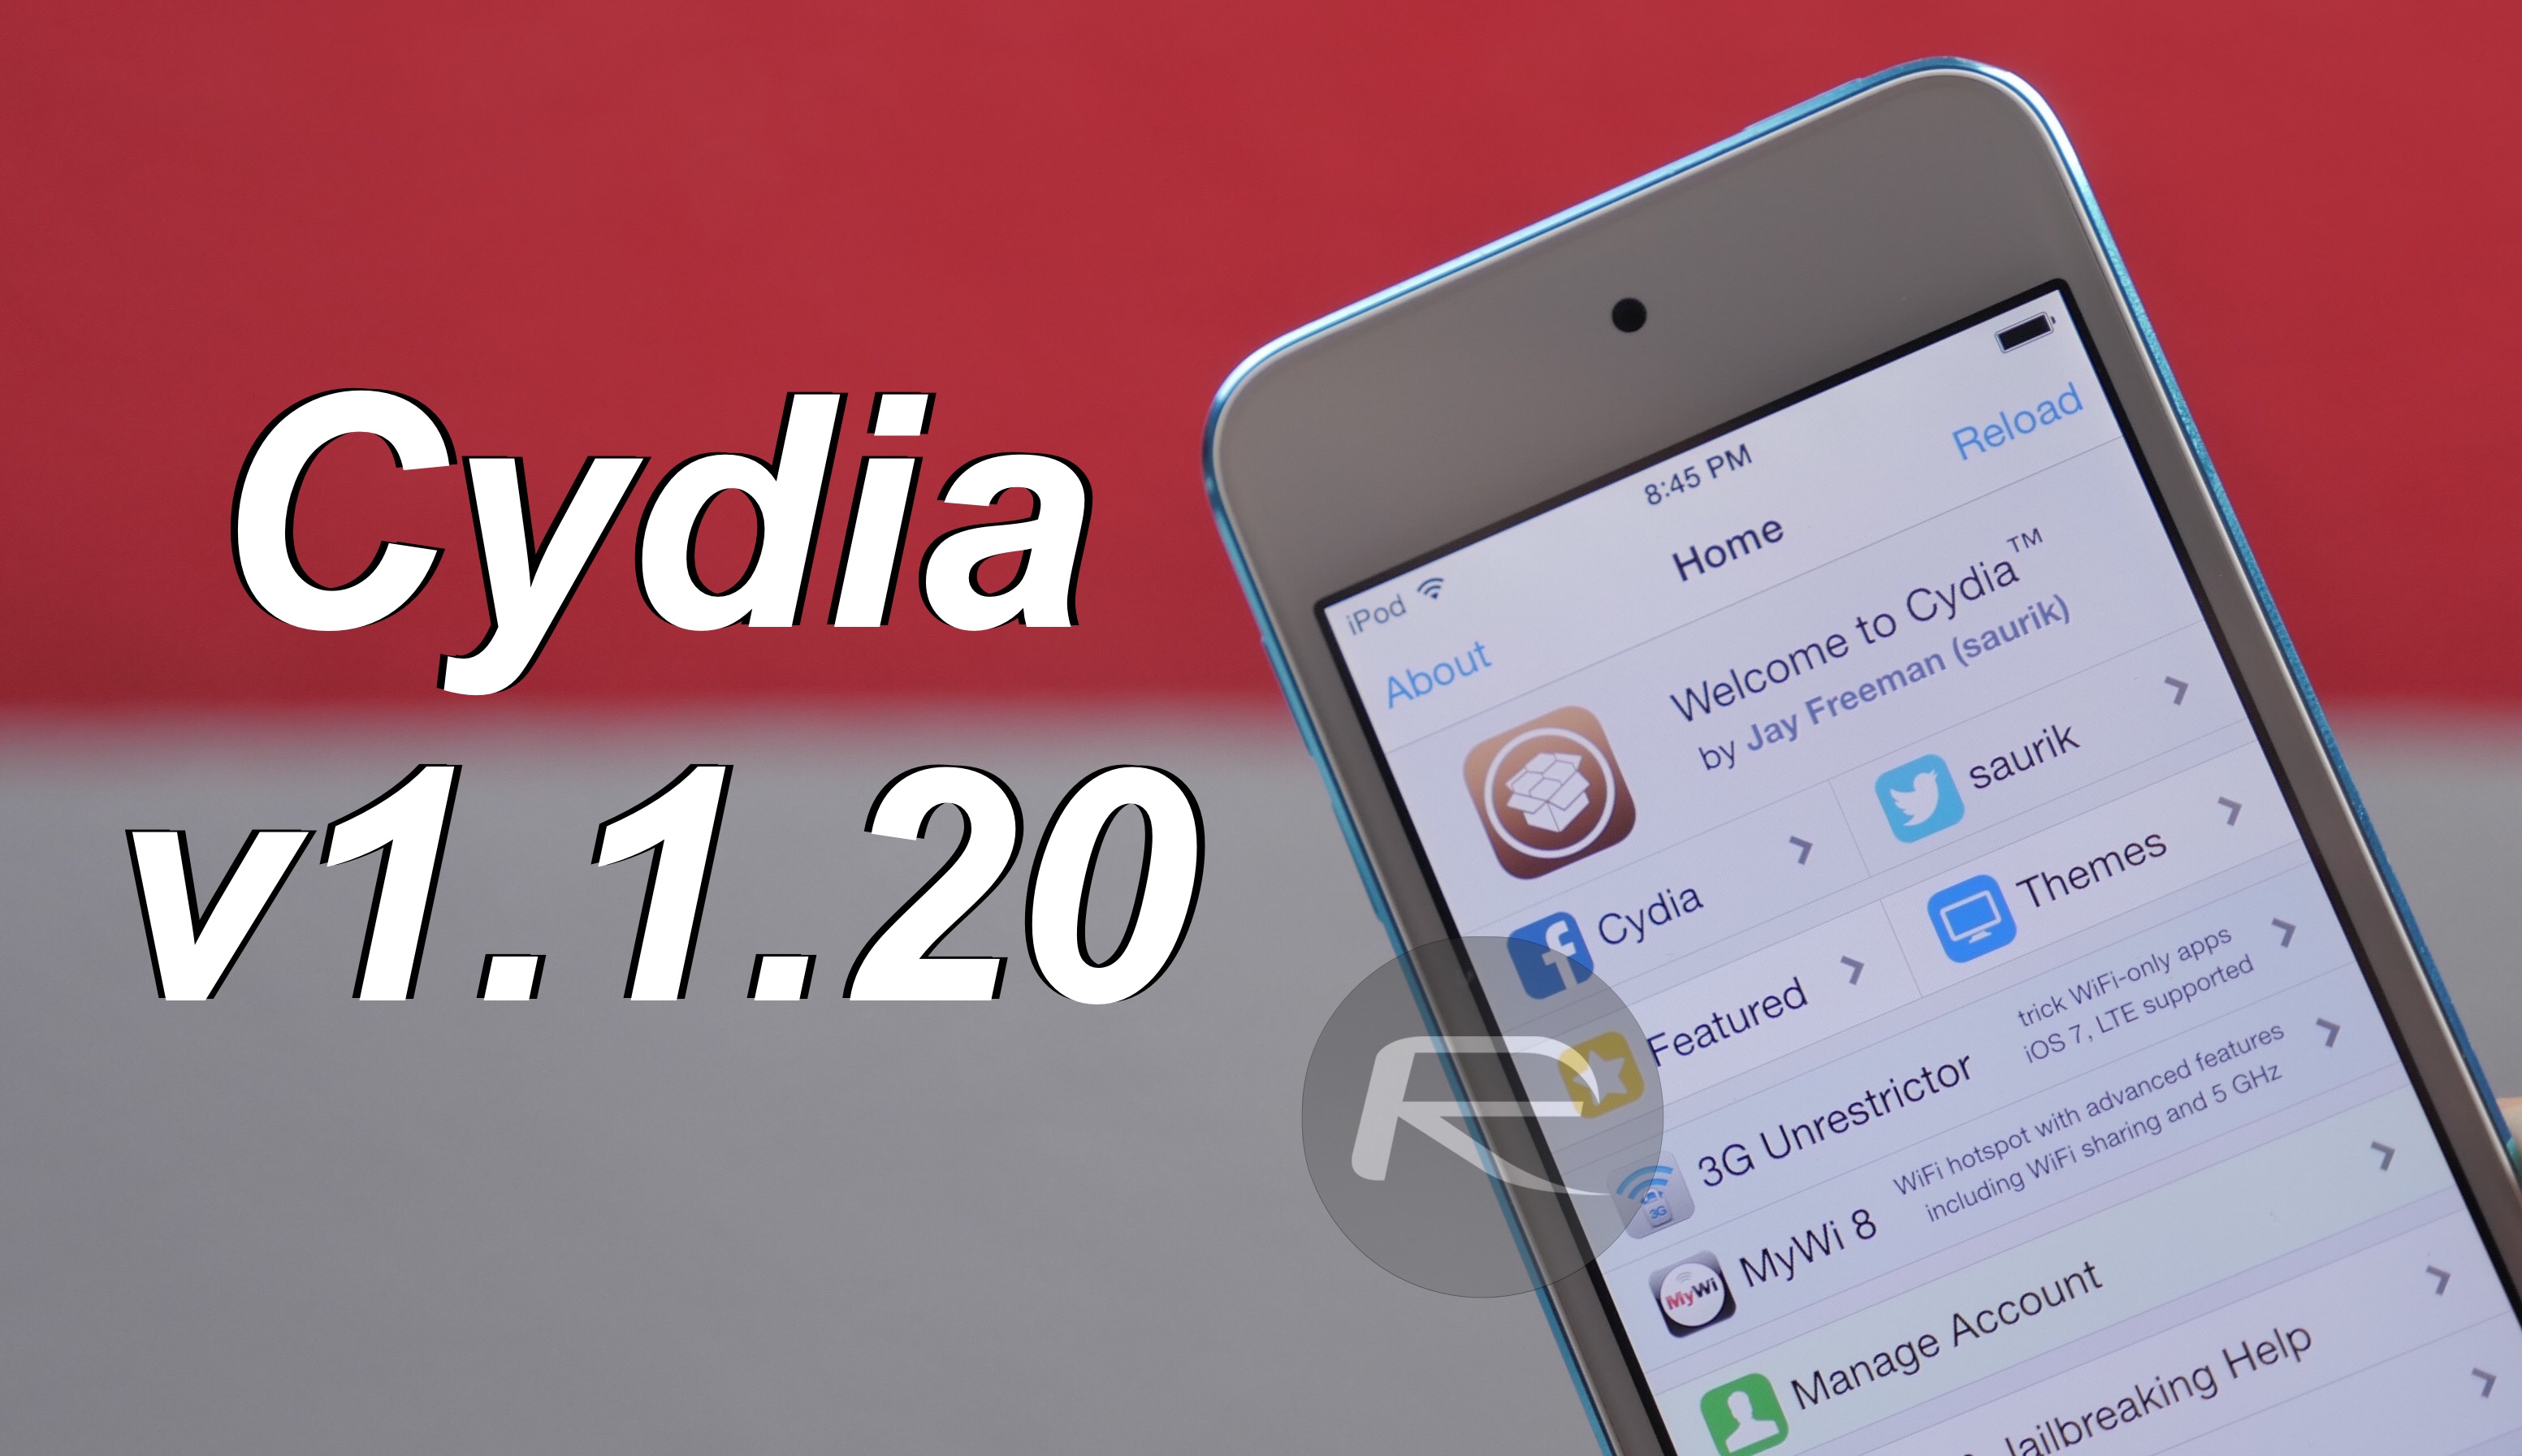 Cydia 1.1.20